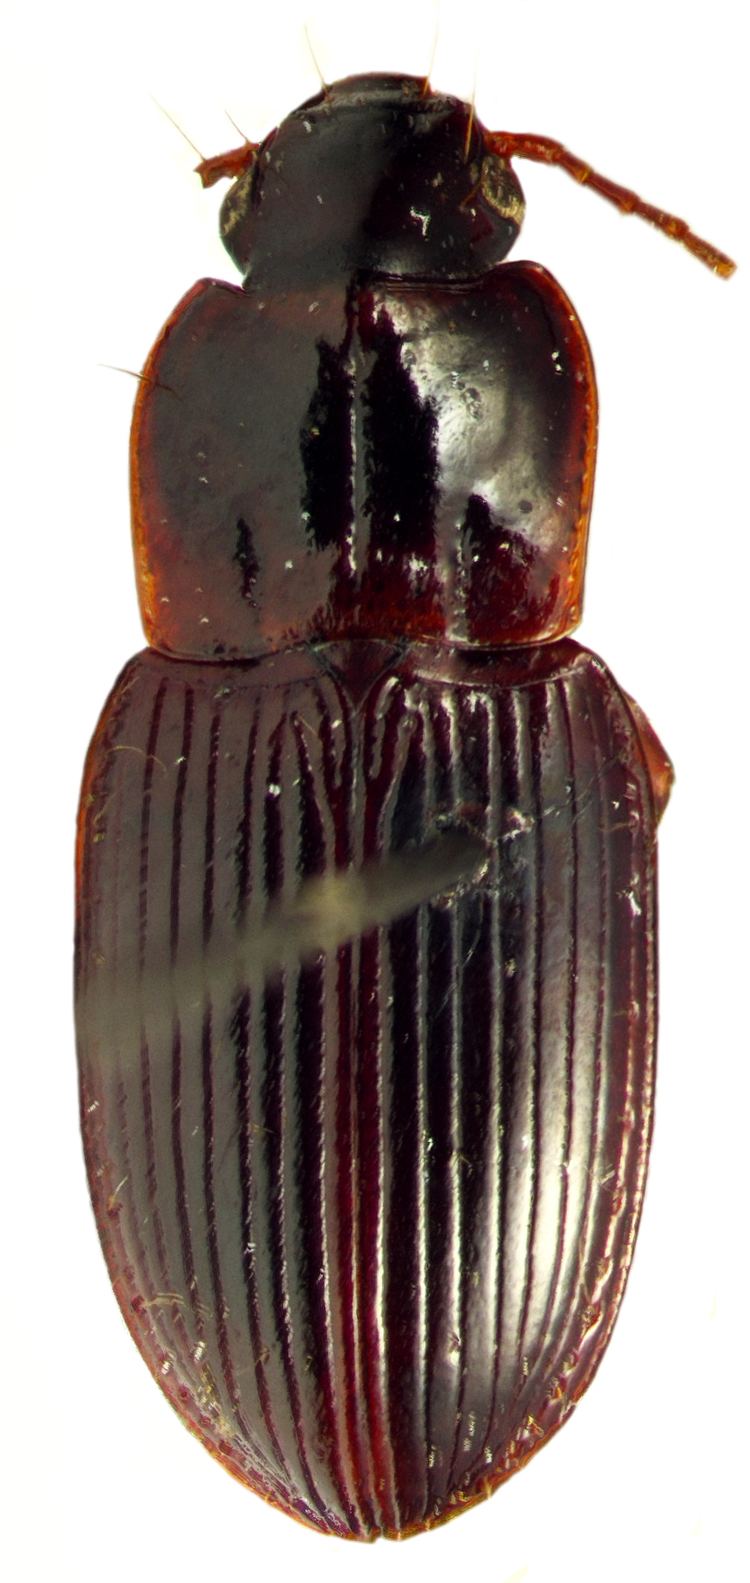 Platyderus Platyderus Platyderus schrammi Anichtchenko 2012 Carabidae